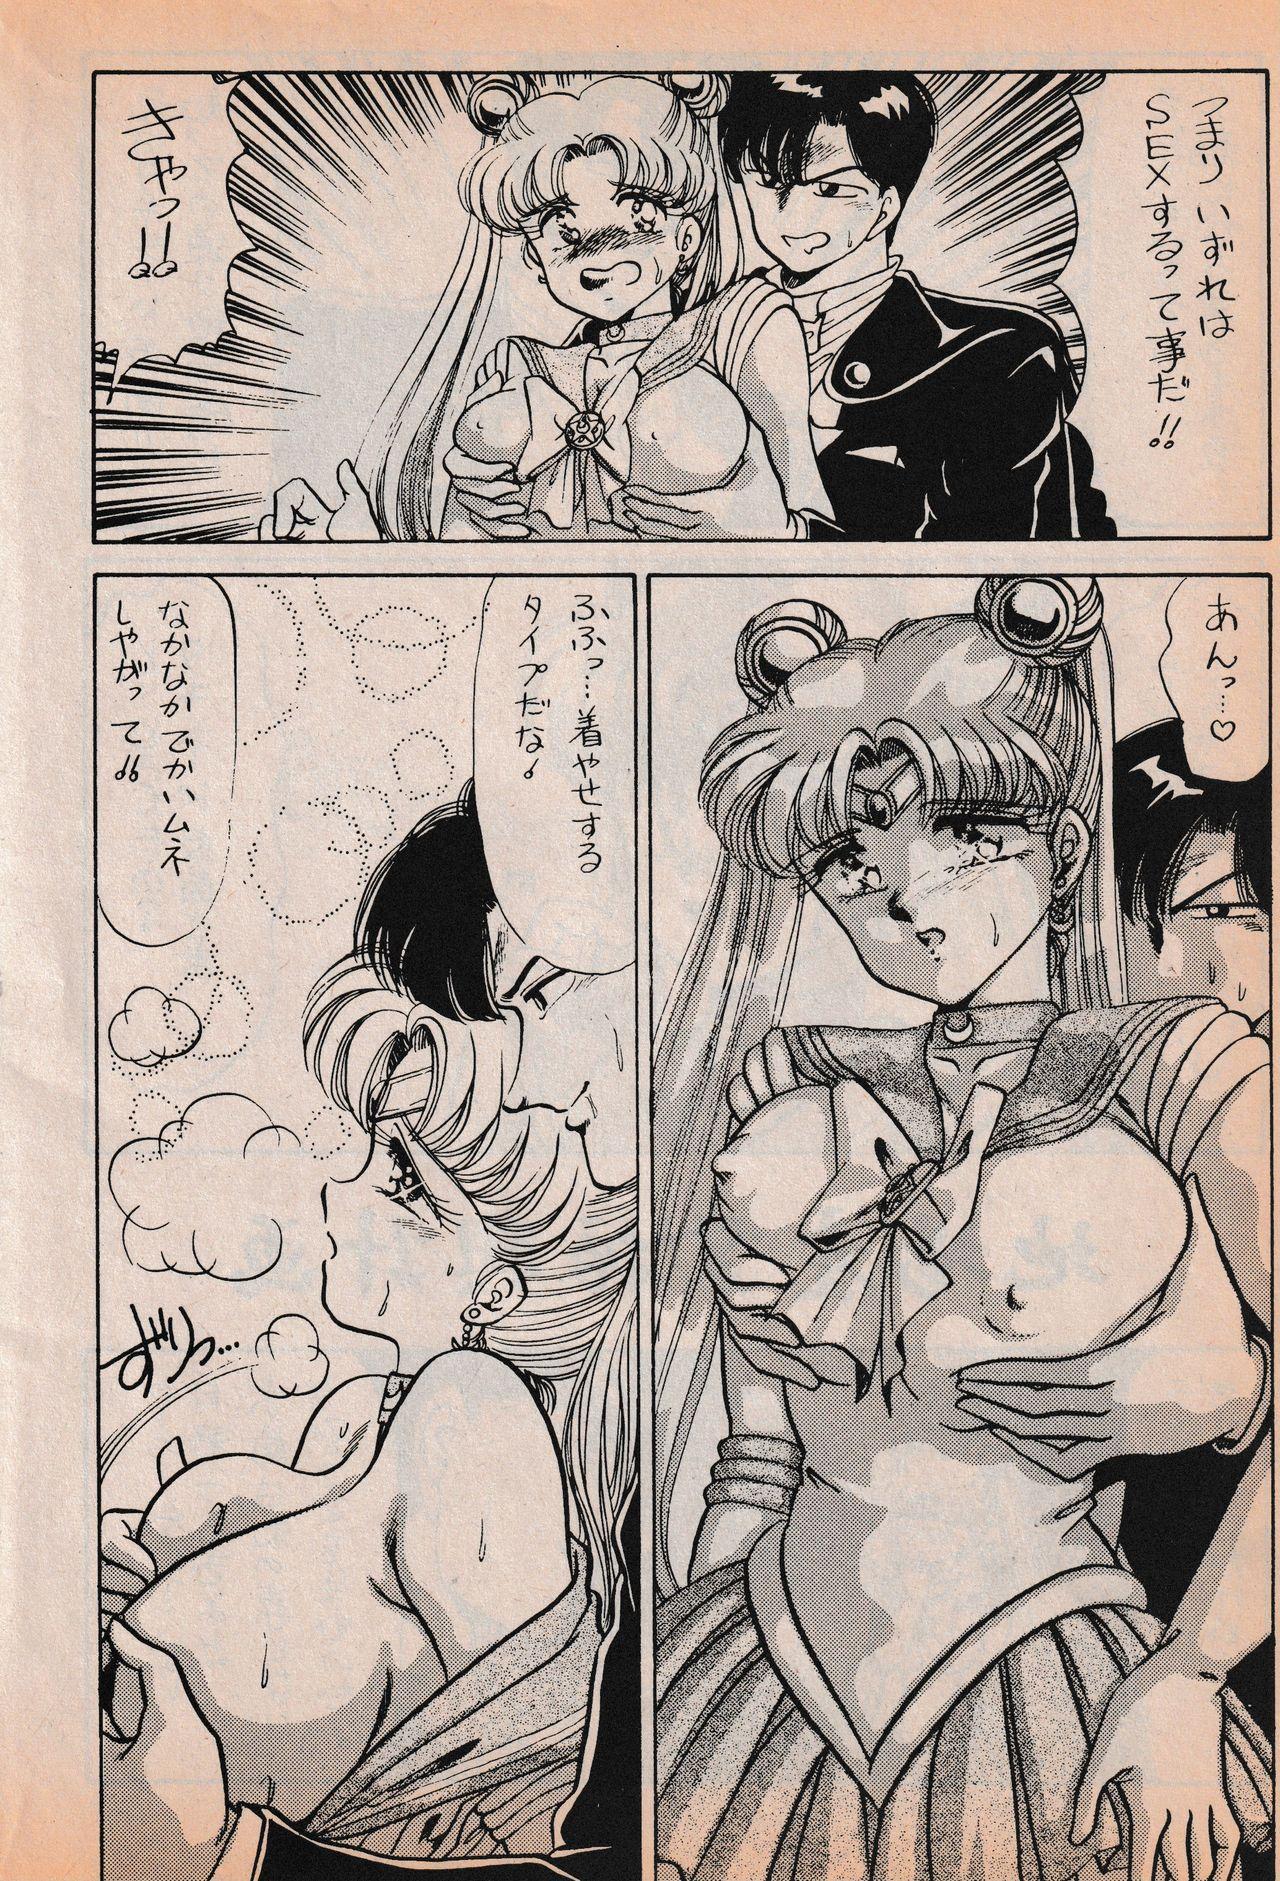 Hardcore Porn Sailor X vol. 7 - The Kama Sutra Of Pain - Sailor moon Tenchi muyo G gundam Beach - Page 3